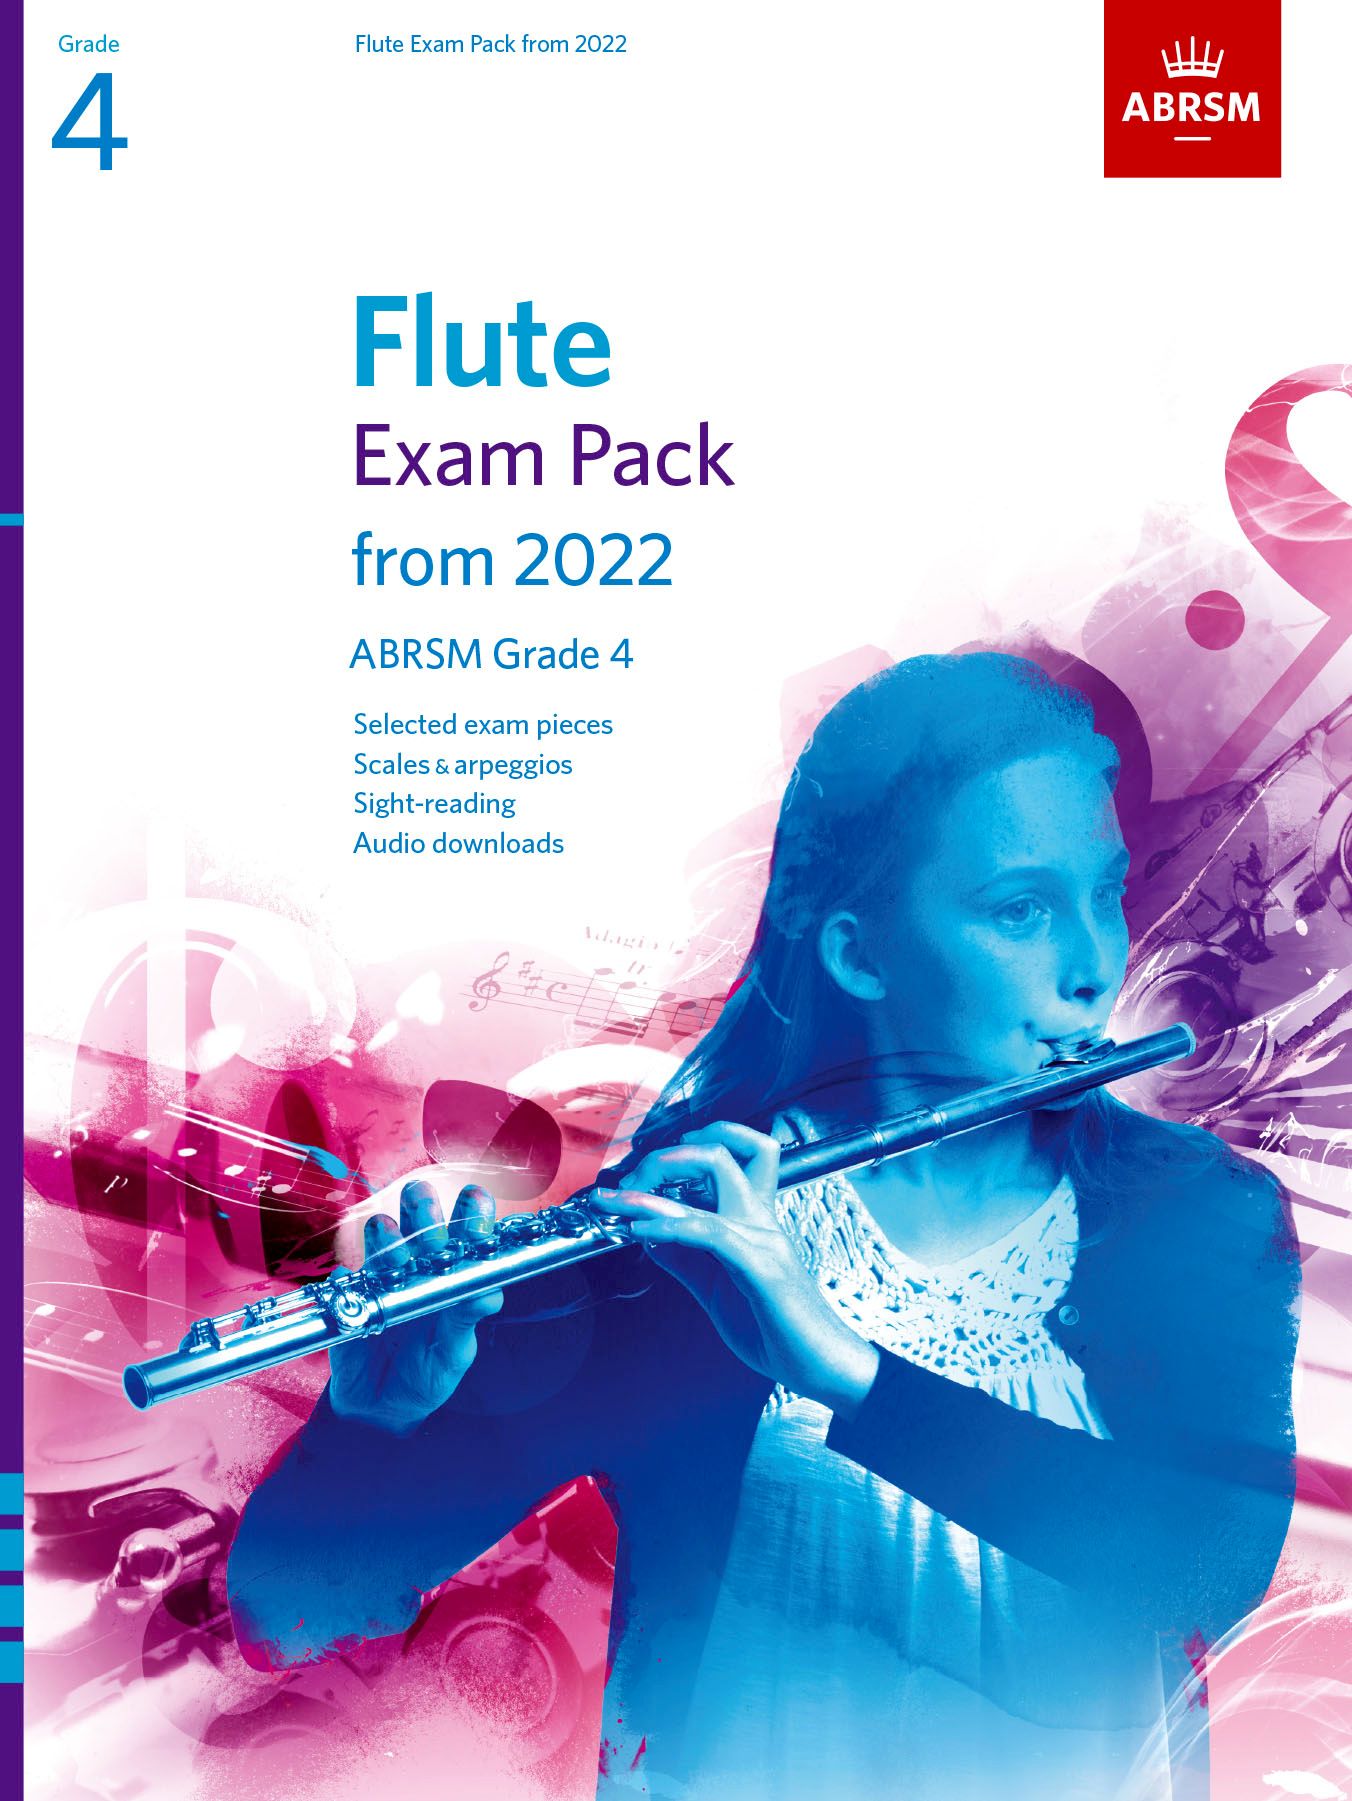 Flute Exam Pack from 2022, ABRSM Grade 4